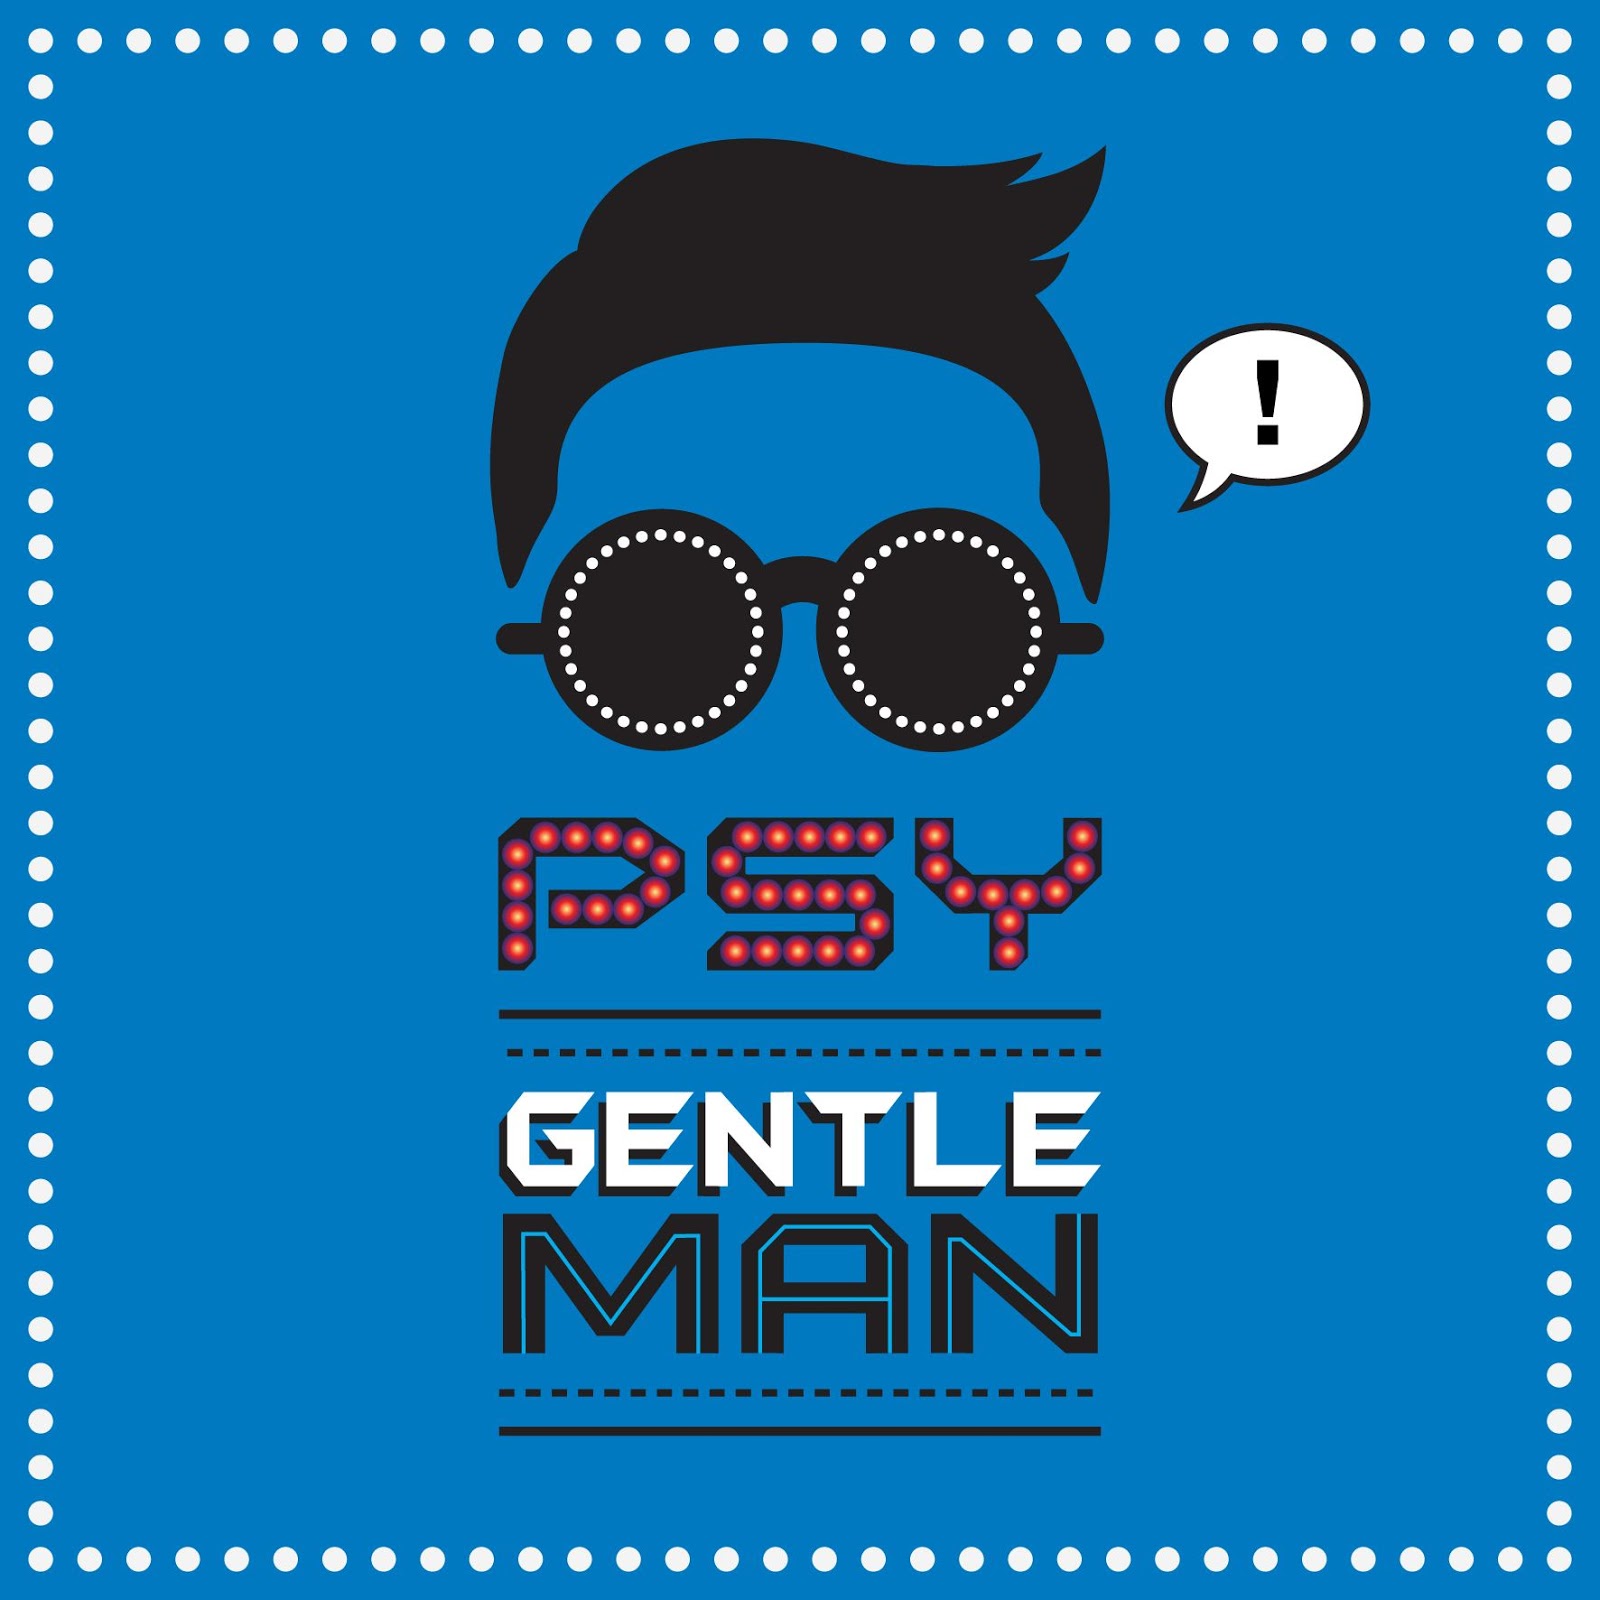 psy-gentleman-lyrics-cover.jpg